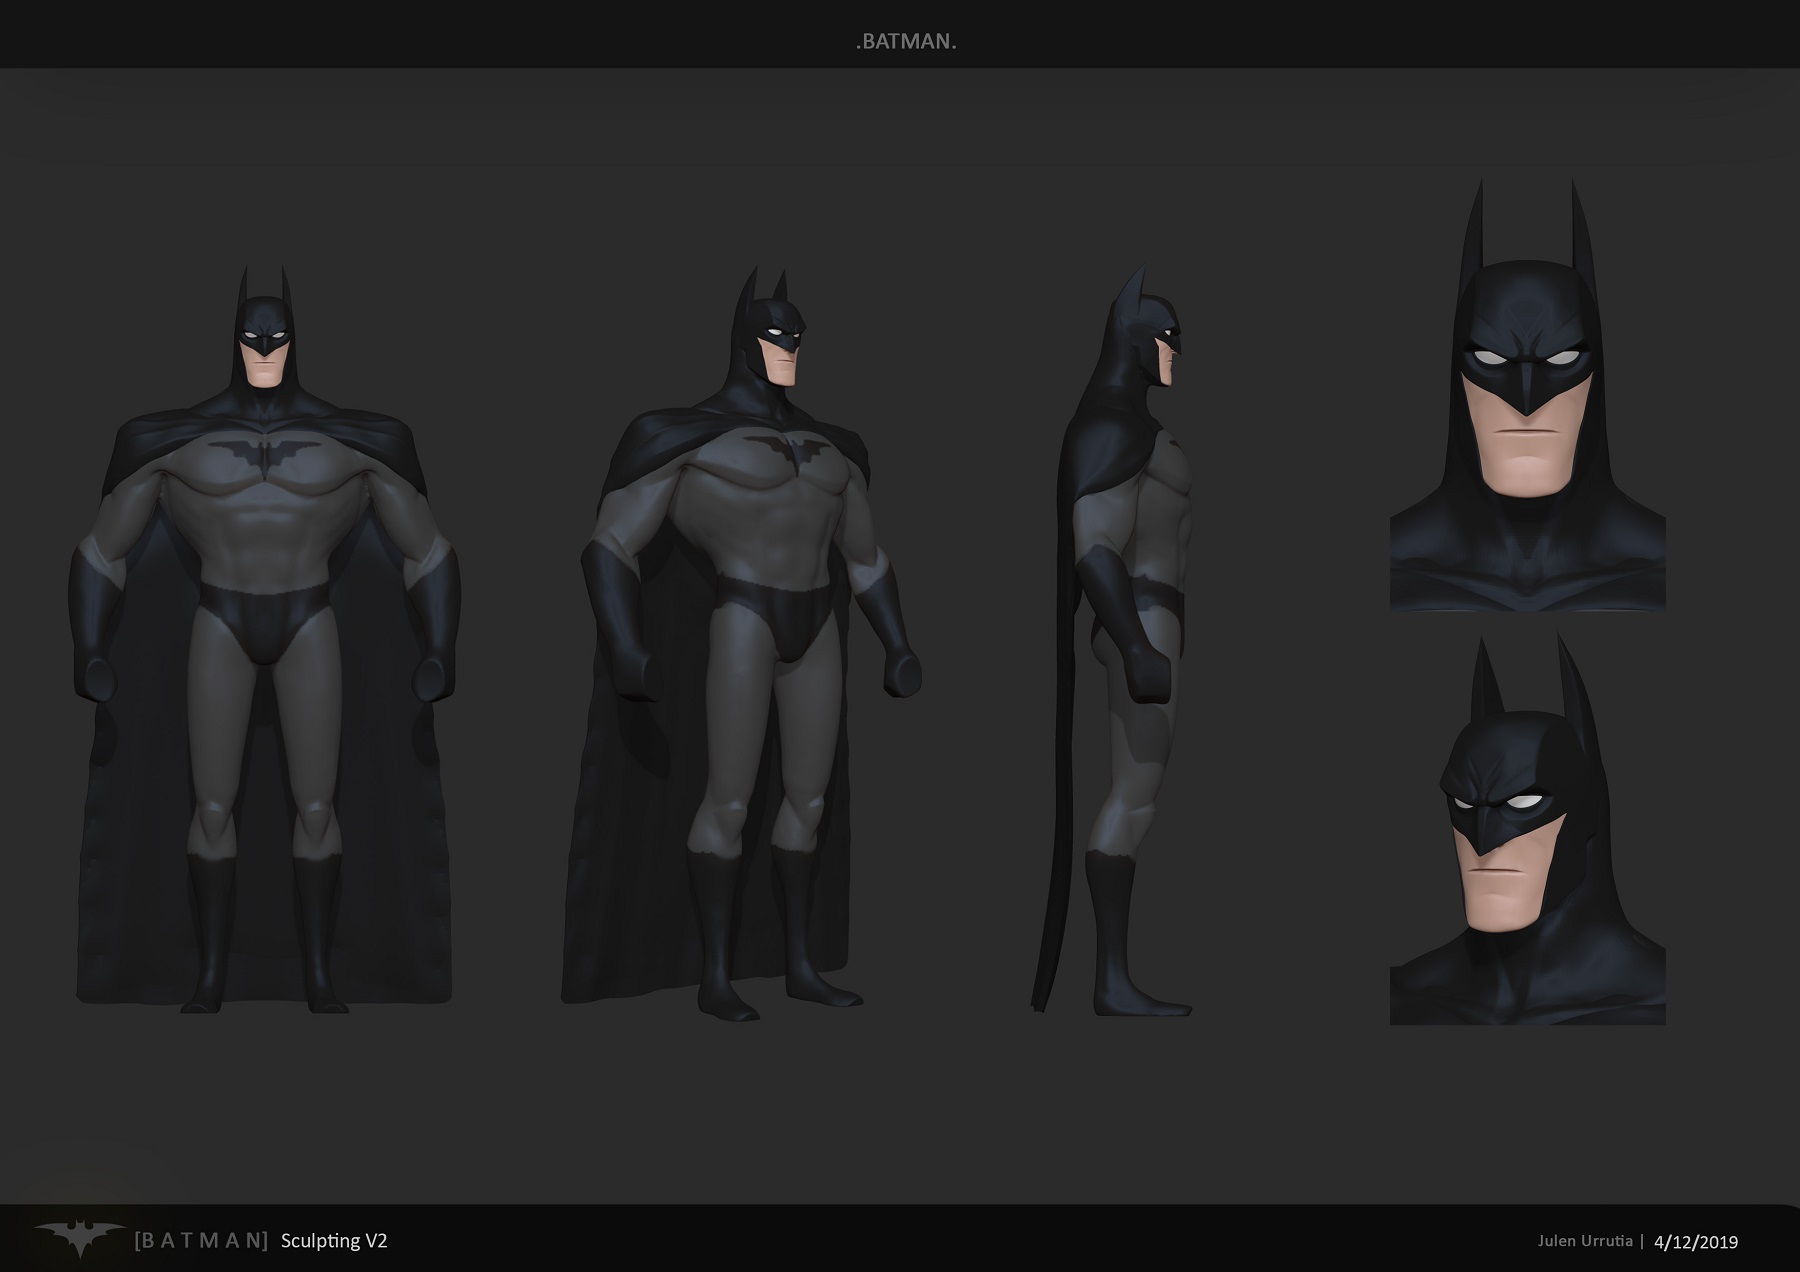 Julen Urrutia artista digital reimagina Batman atraves de computacao grafica 7